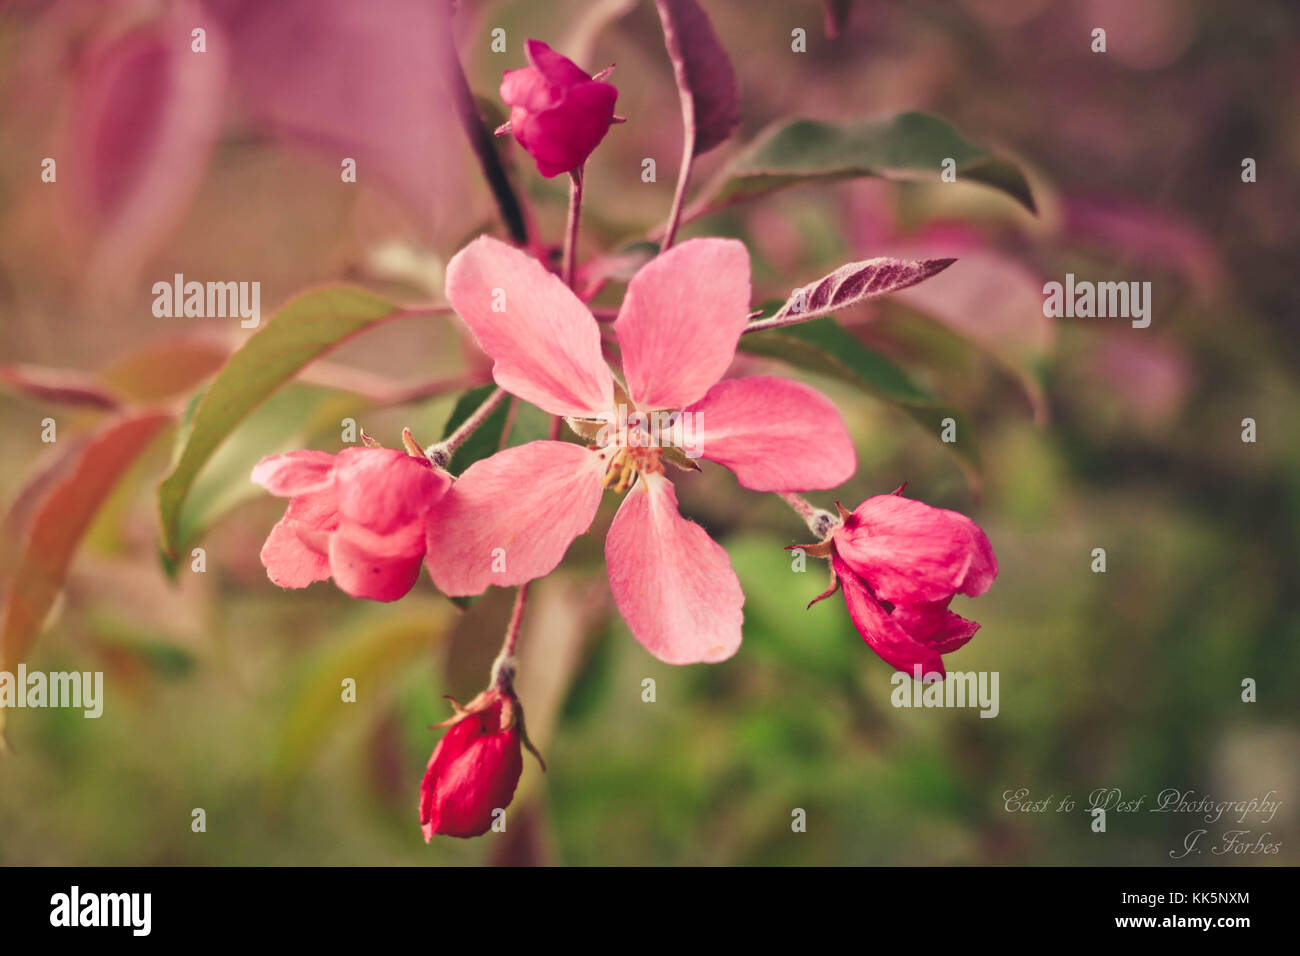 PInk cherry blossom type flowers Stock Photo